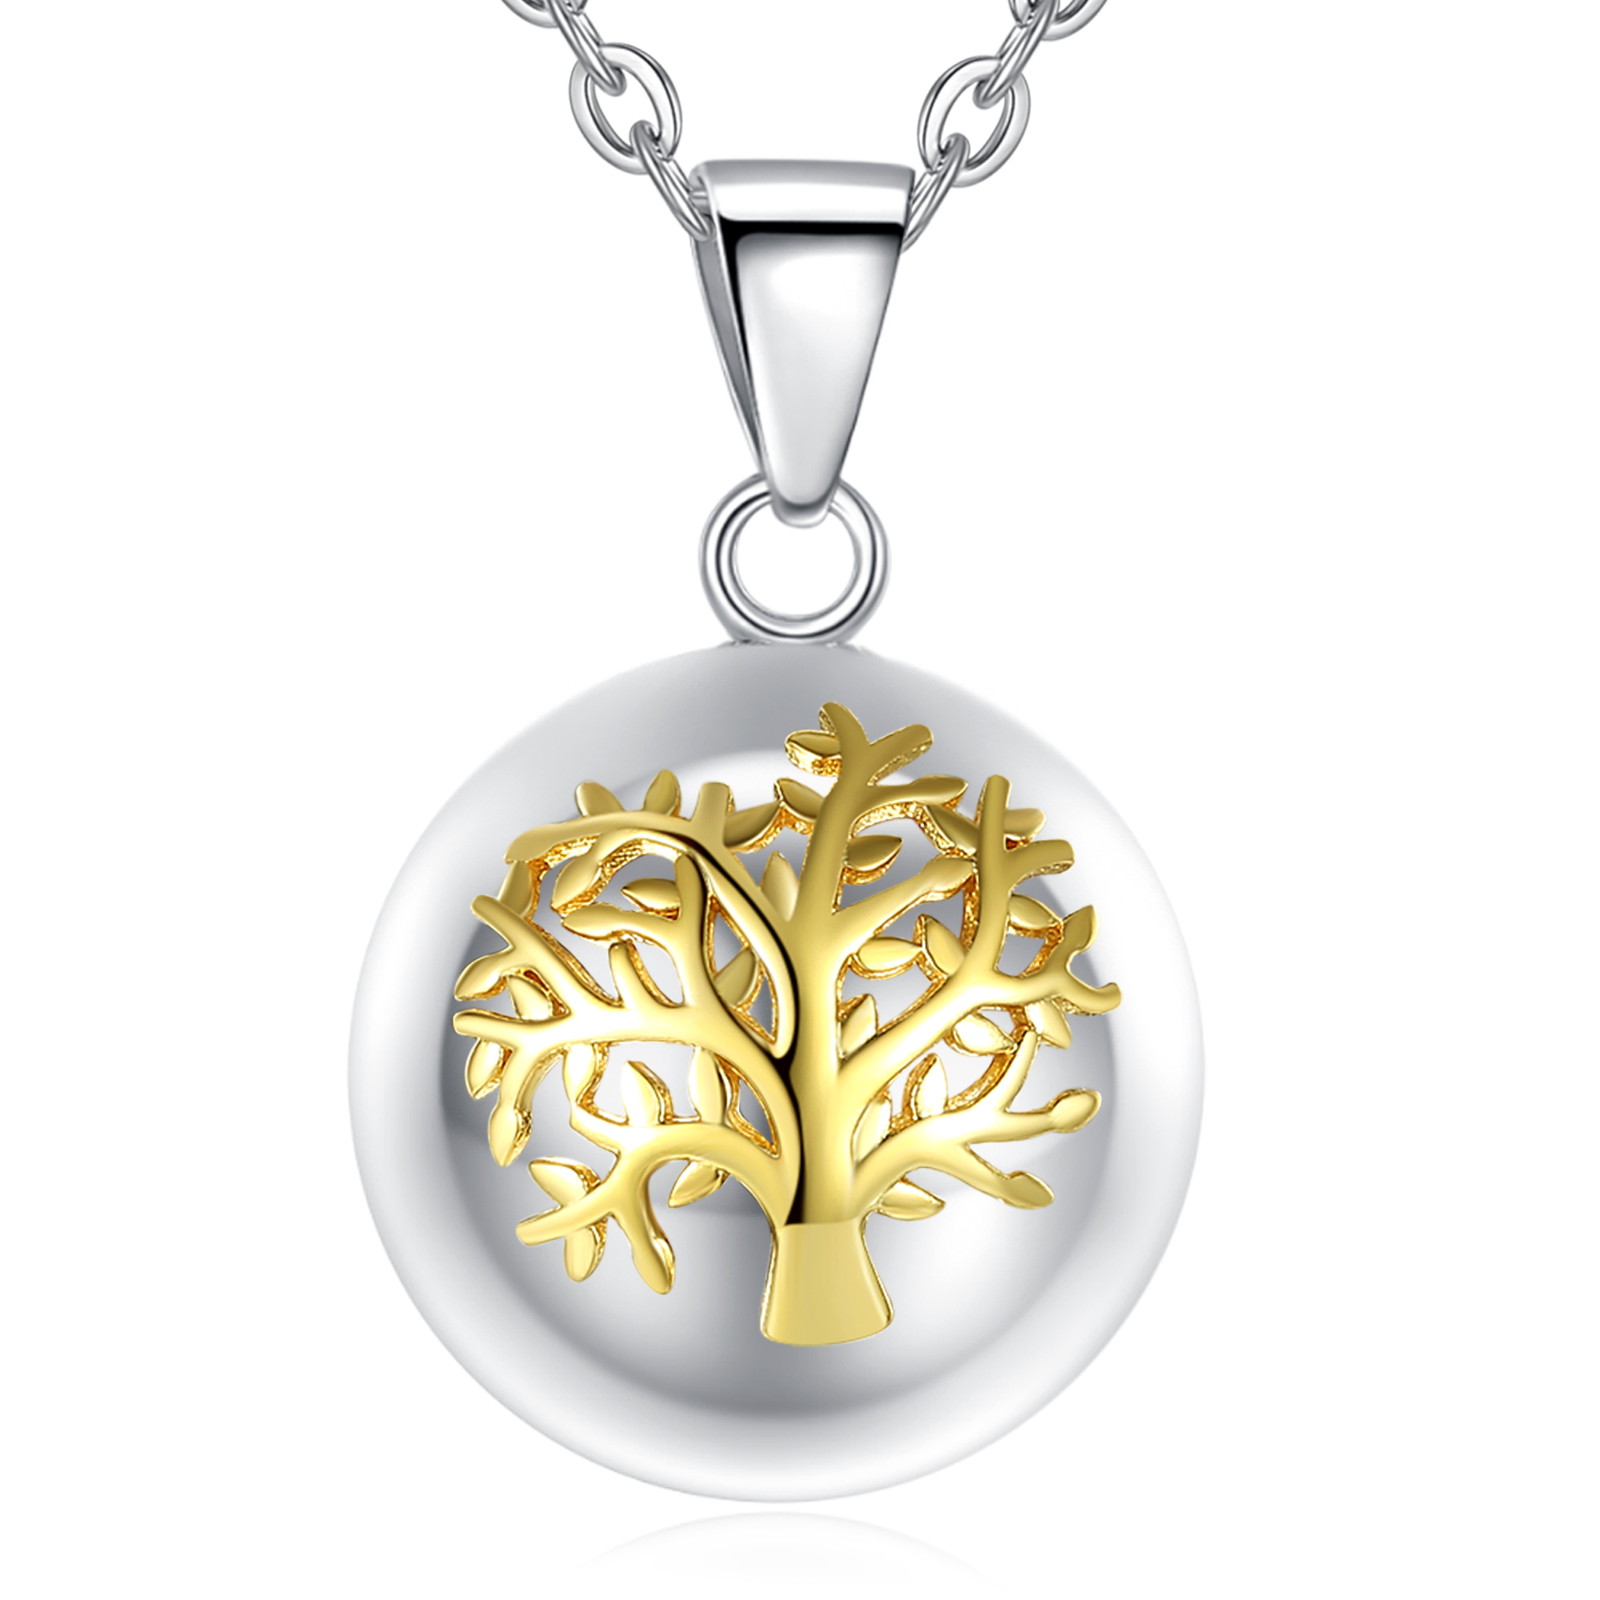 Merryshine Jewelry Vintage Tree of Life Harmony Ball Bells Jewelry Pregnancy Chimes Necklace